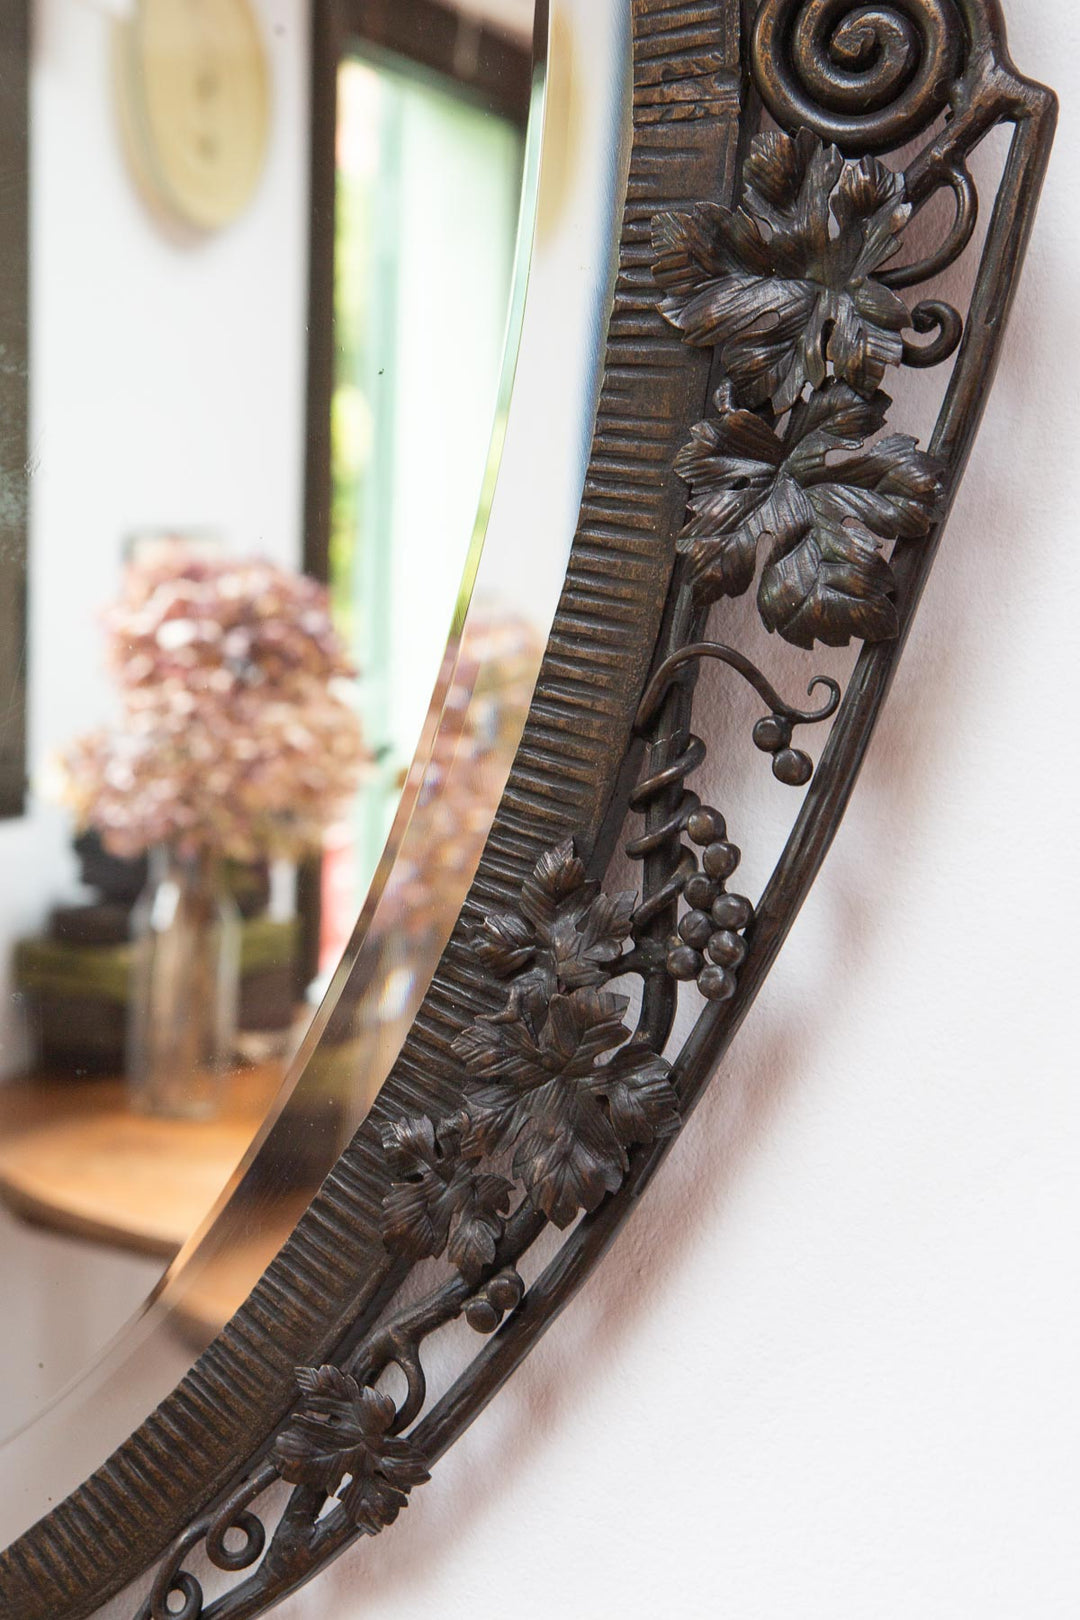 Antiguo espejo frances hierro negro art deco antique french mirror+